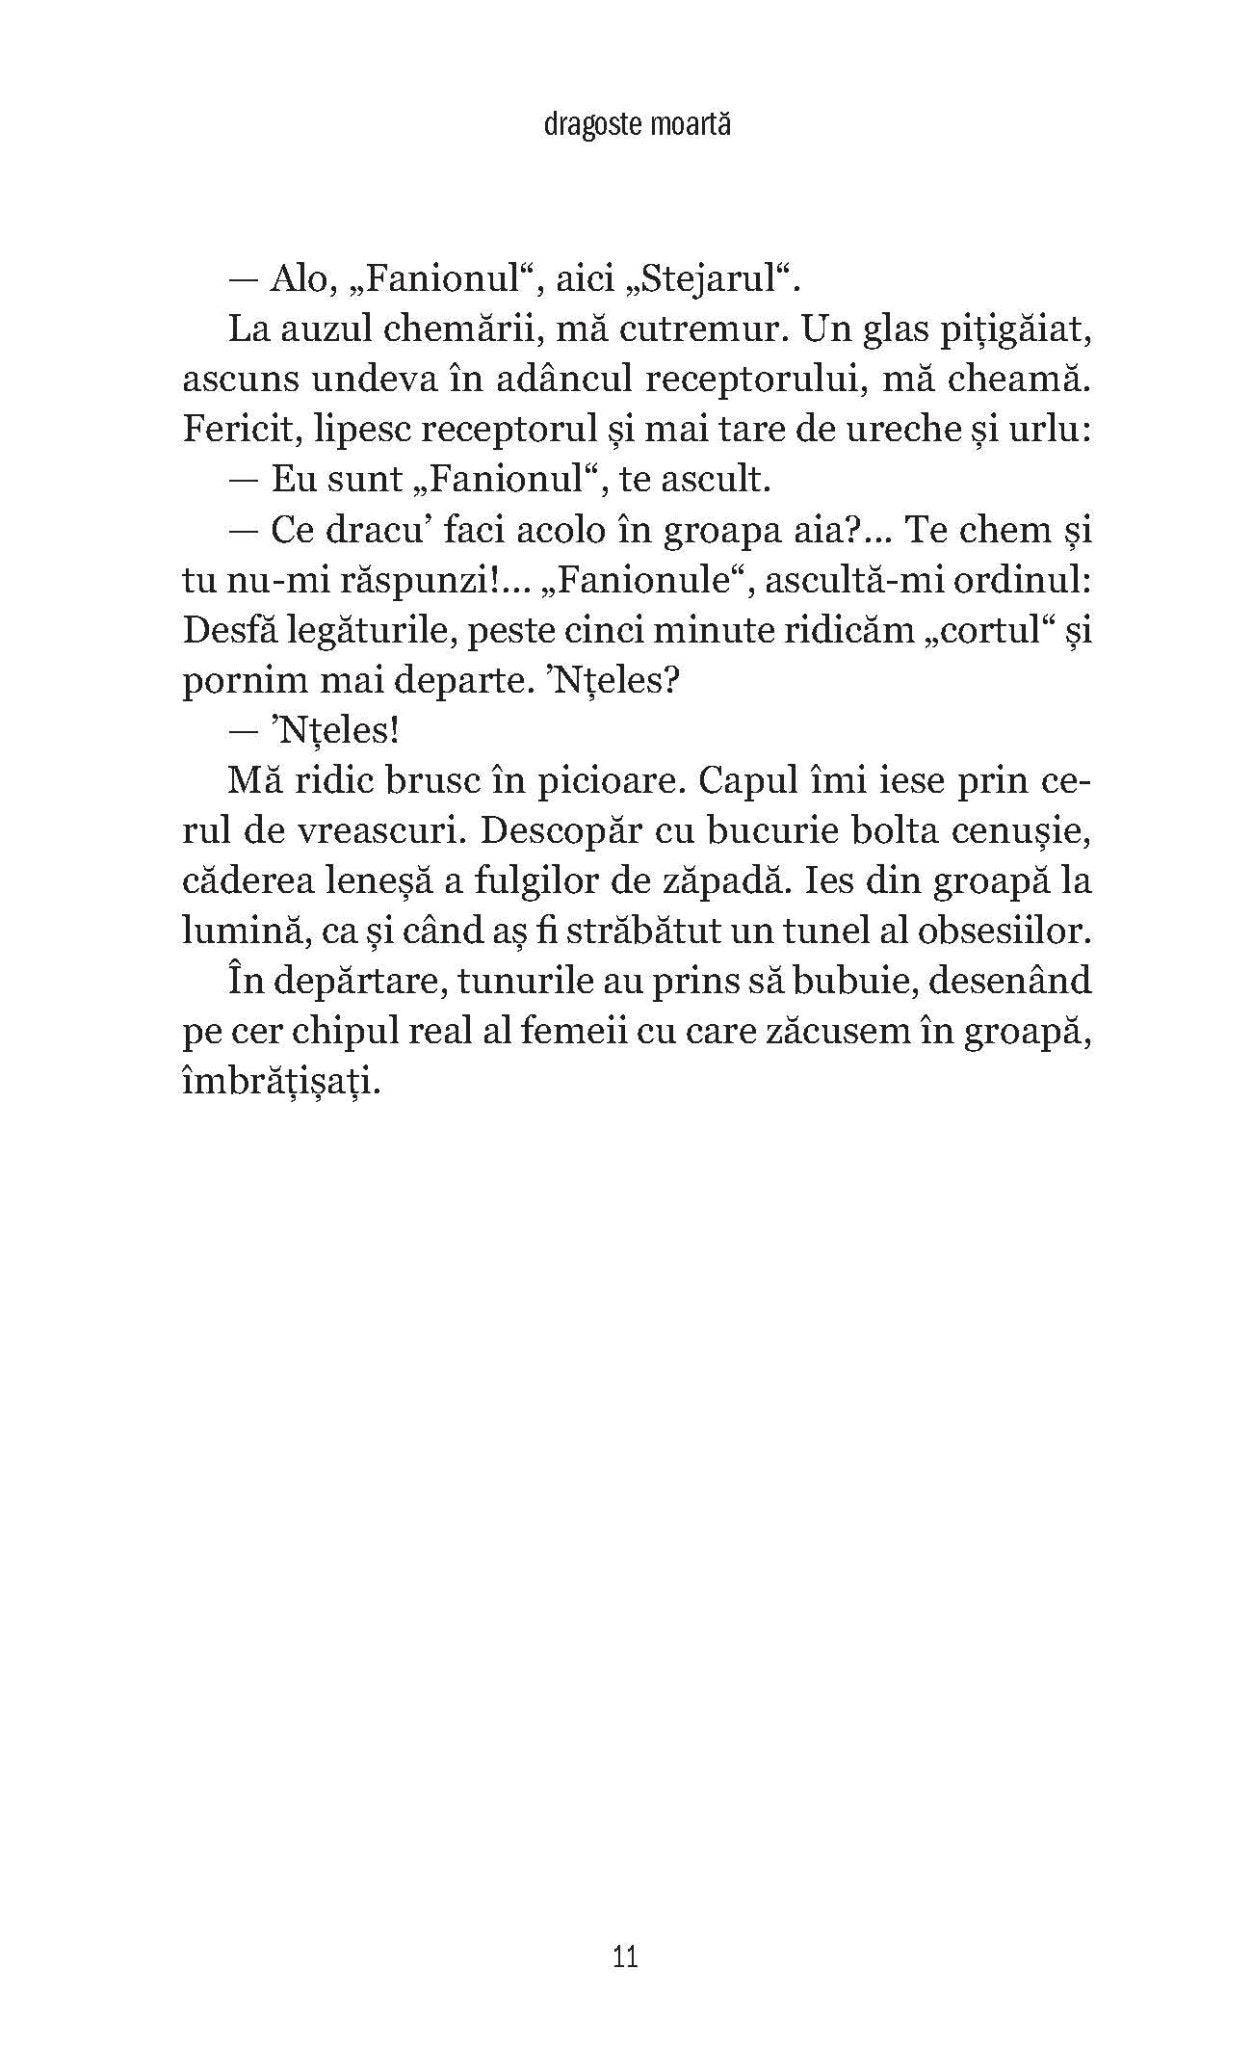 Dragoste moarta - Ed. digitala - Publisol.ro